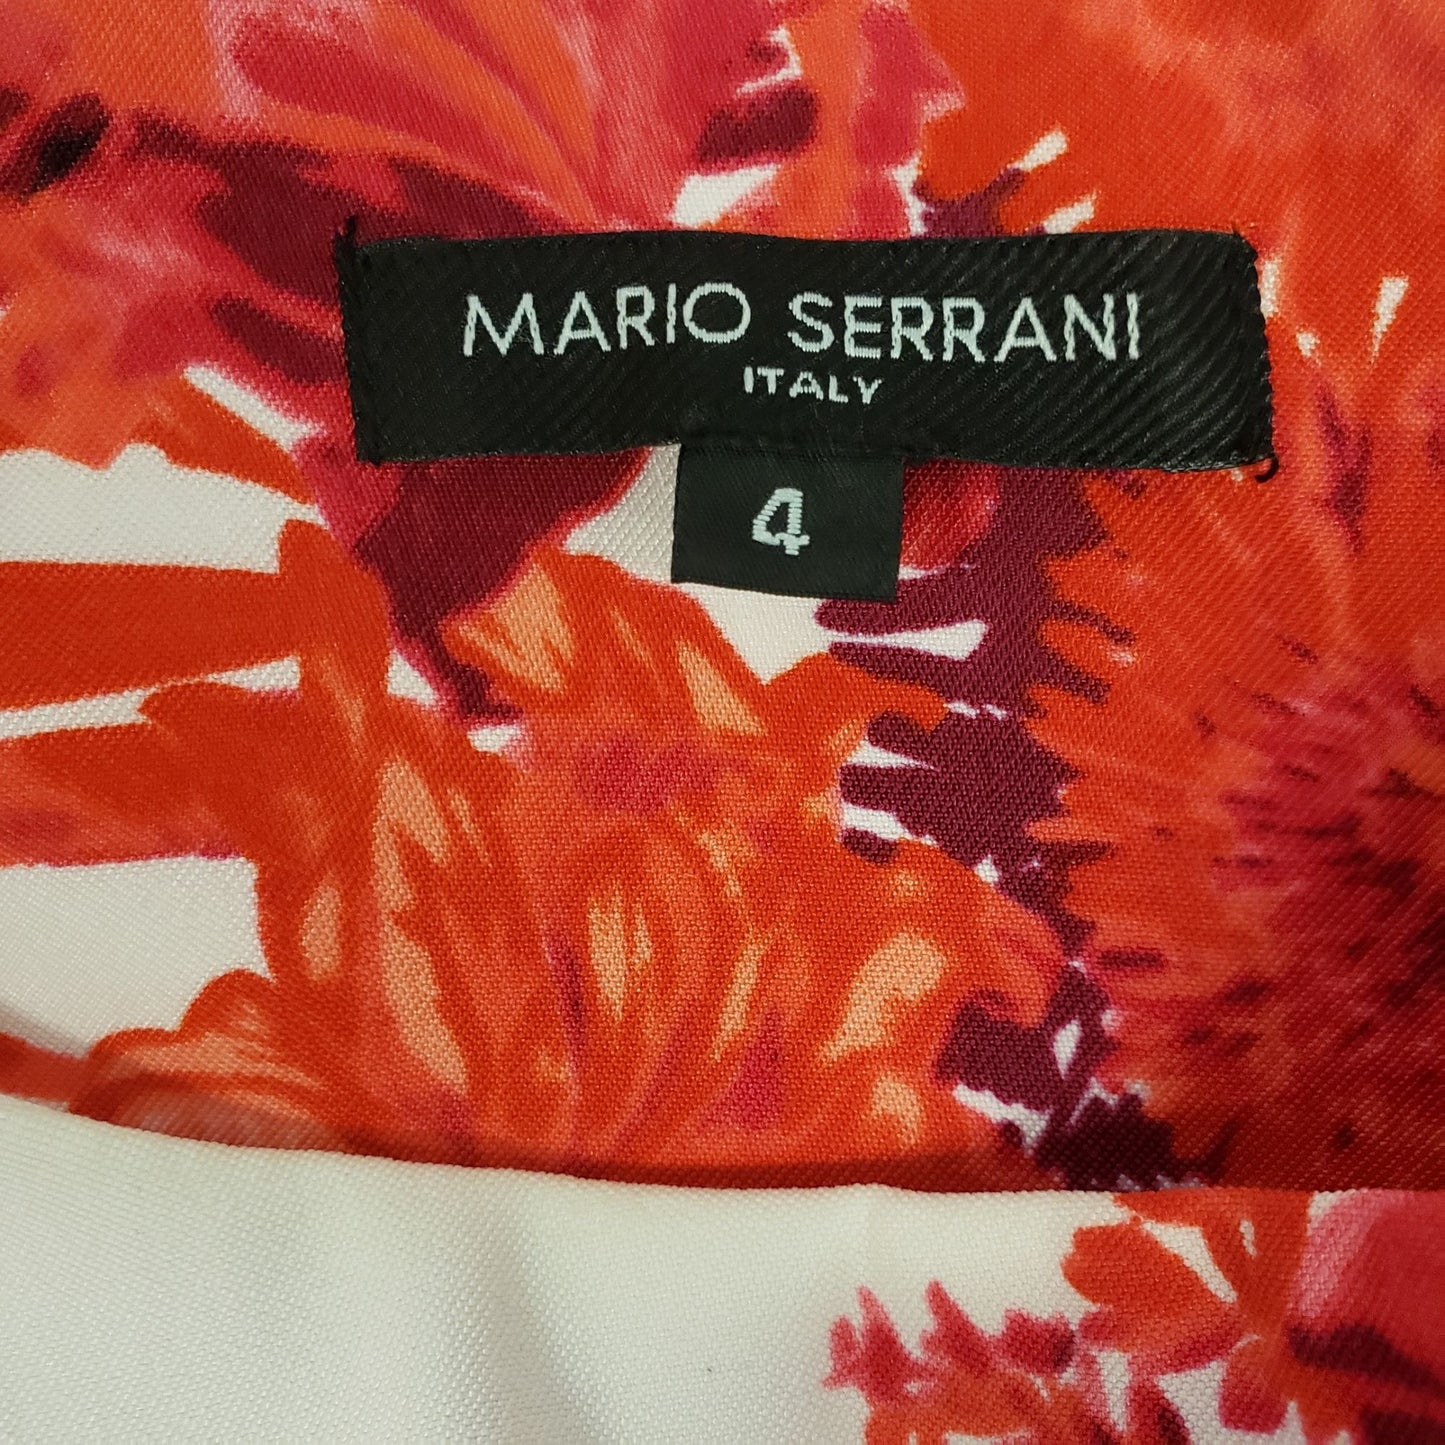 Mario Serrani Floral Shift Dress Size 4